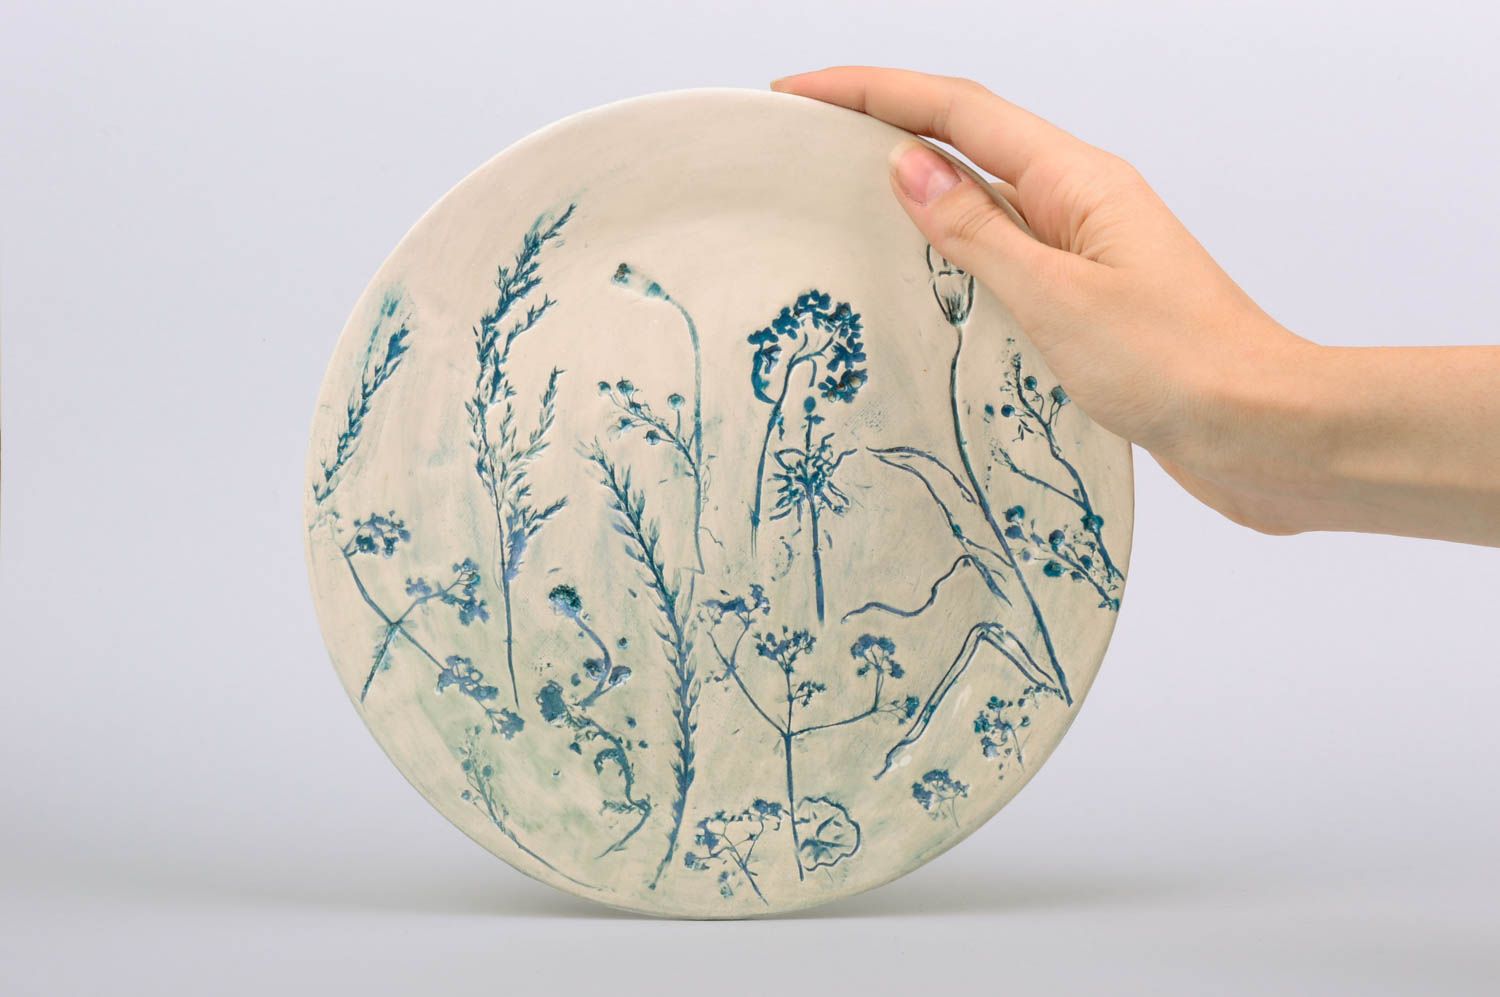 Beautiful round handmade ceramic plate clay plate decorative dishware gift ideas photo 2